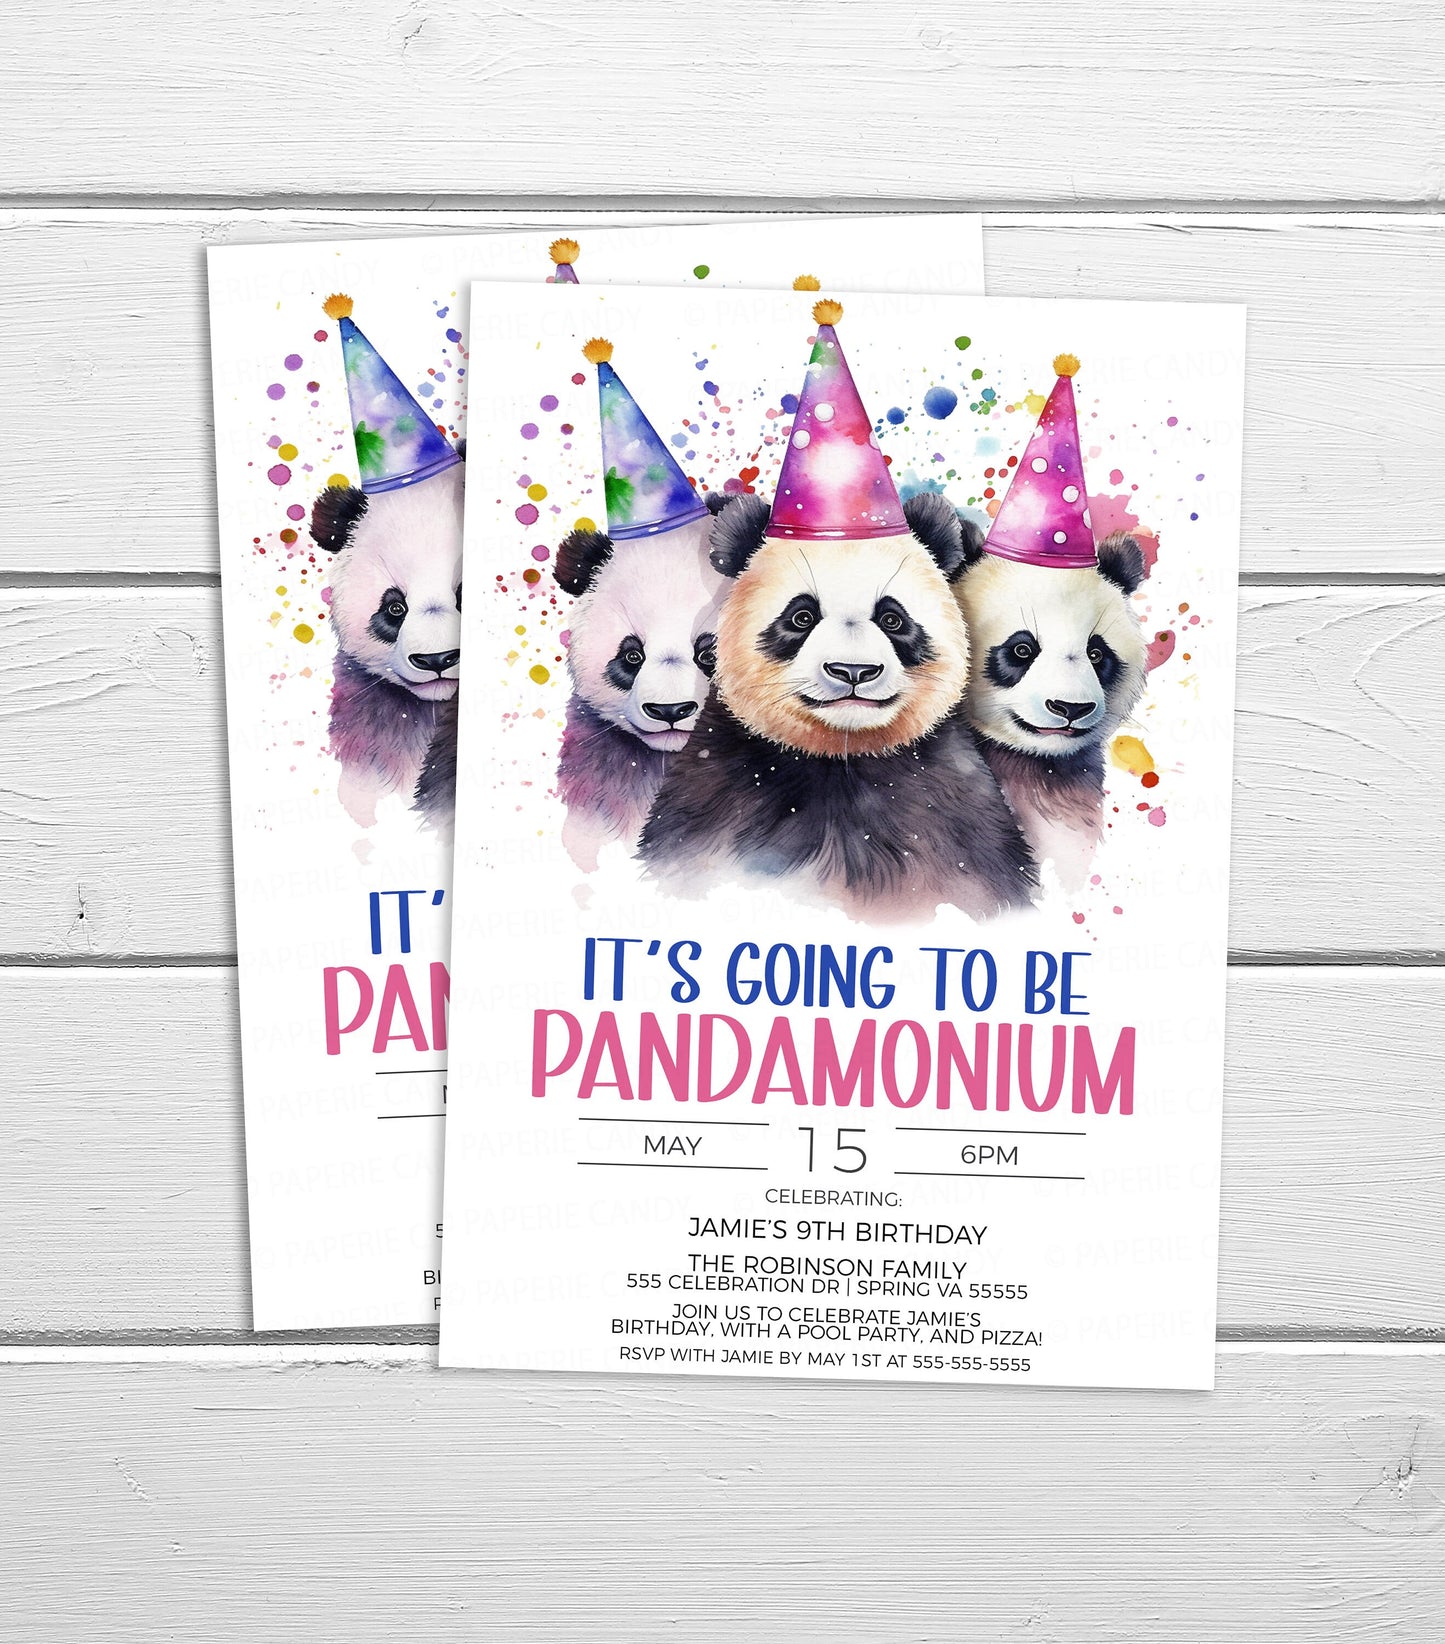 Panda Invitation, Panda Party Invite, Pandamonium Birthday Party, Let's Pawty, Calling All Pawty Animals, Editable Printable Template